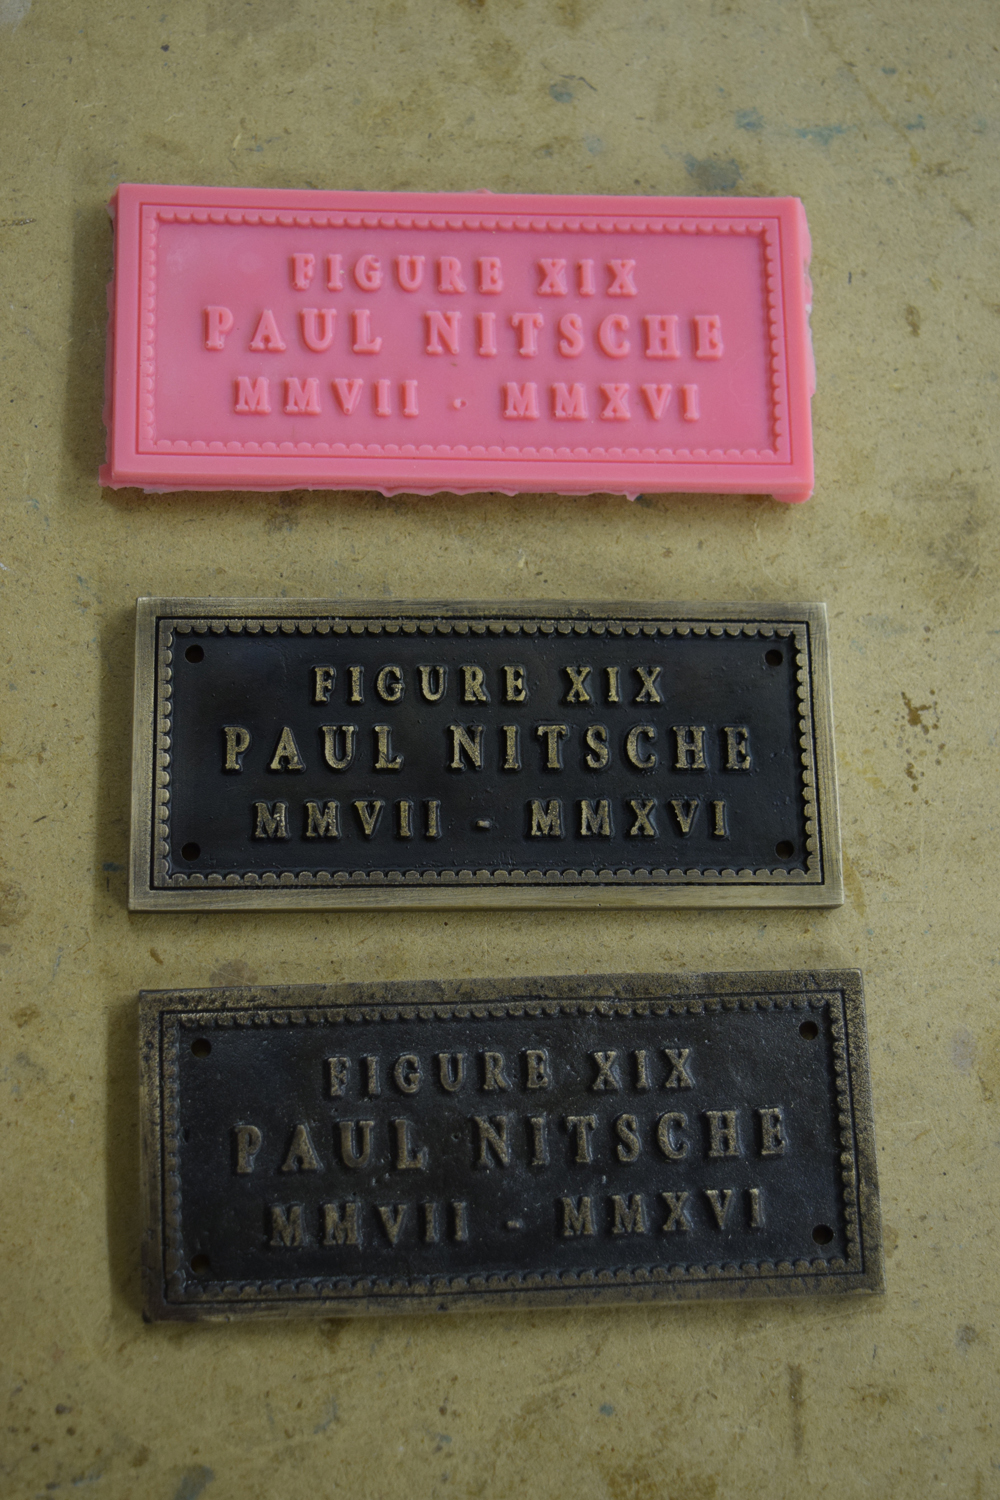  Comparison of the title plates. The original wax (top), the new title plate (middle), and the original title plate (bottom). 